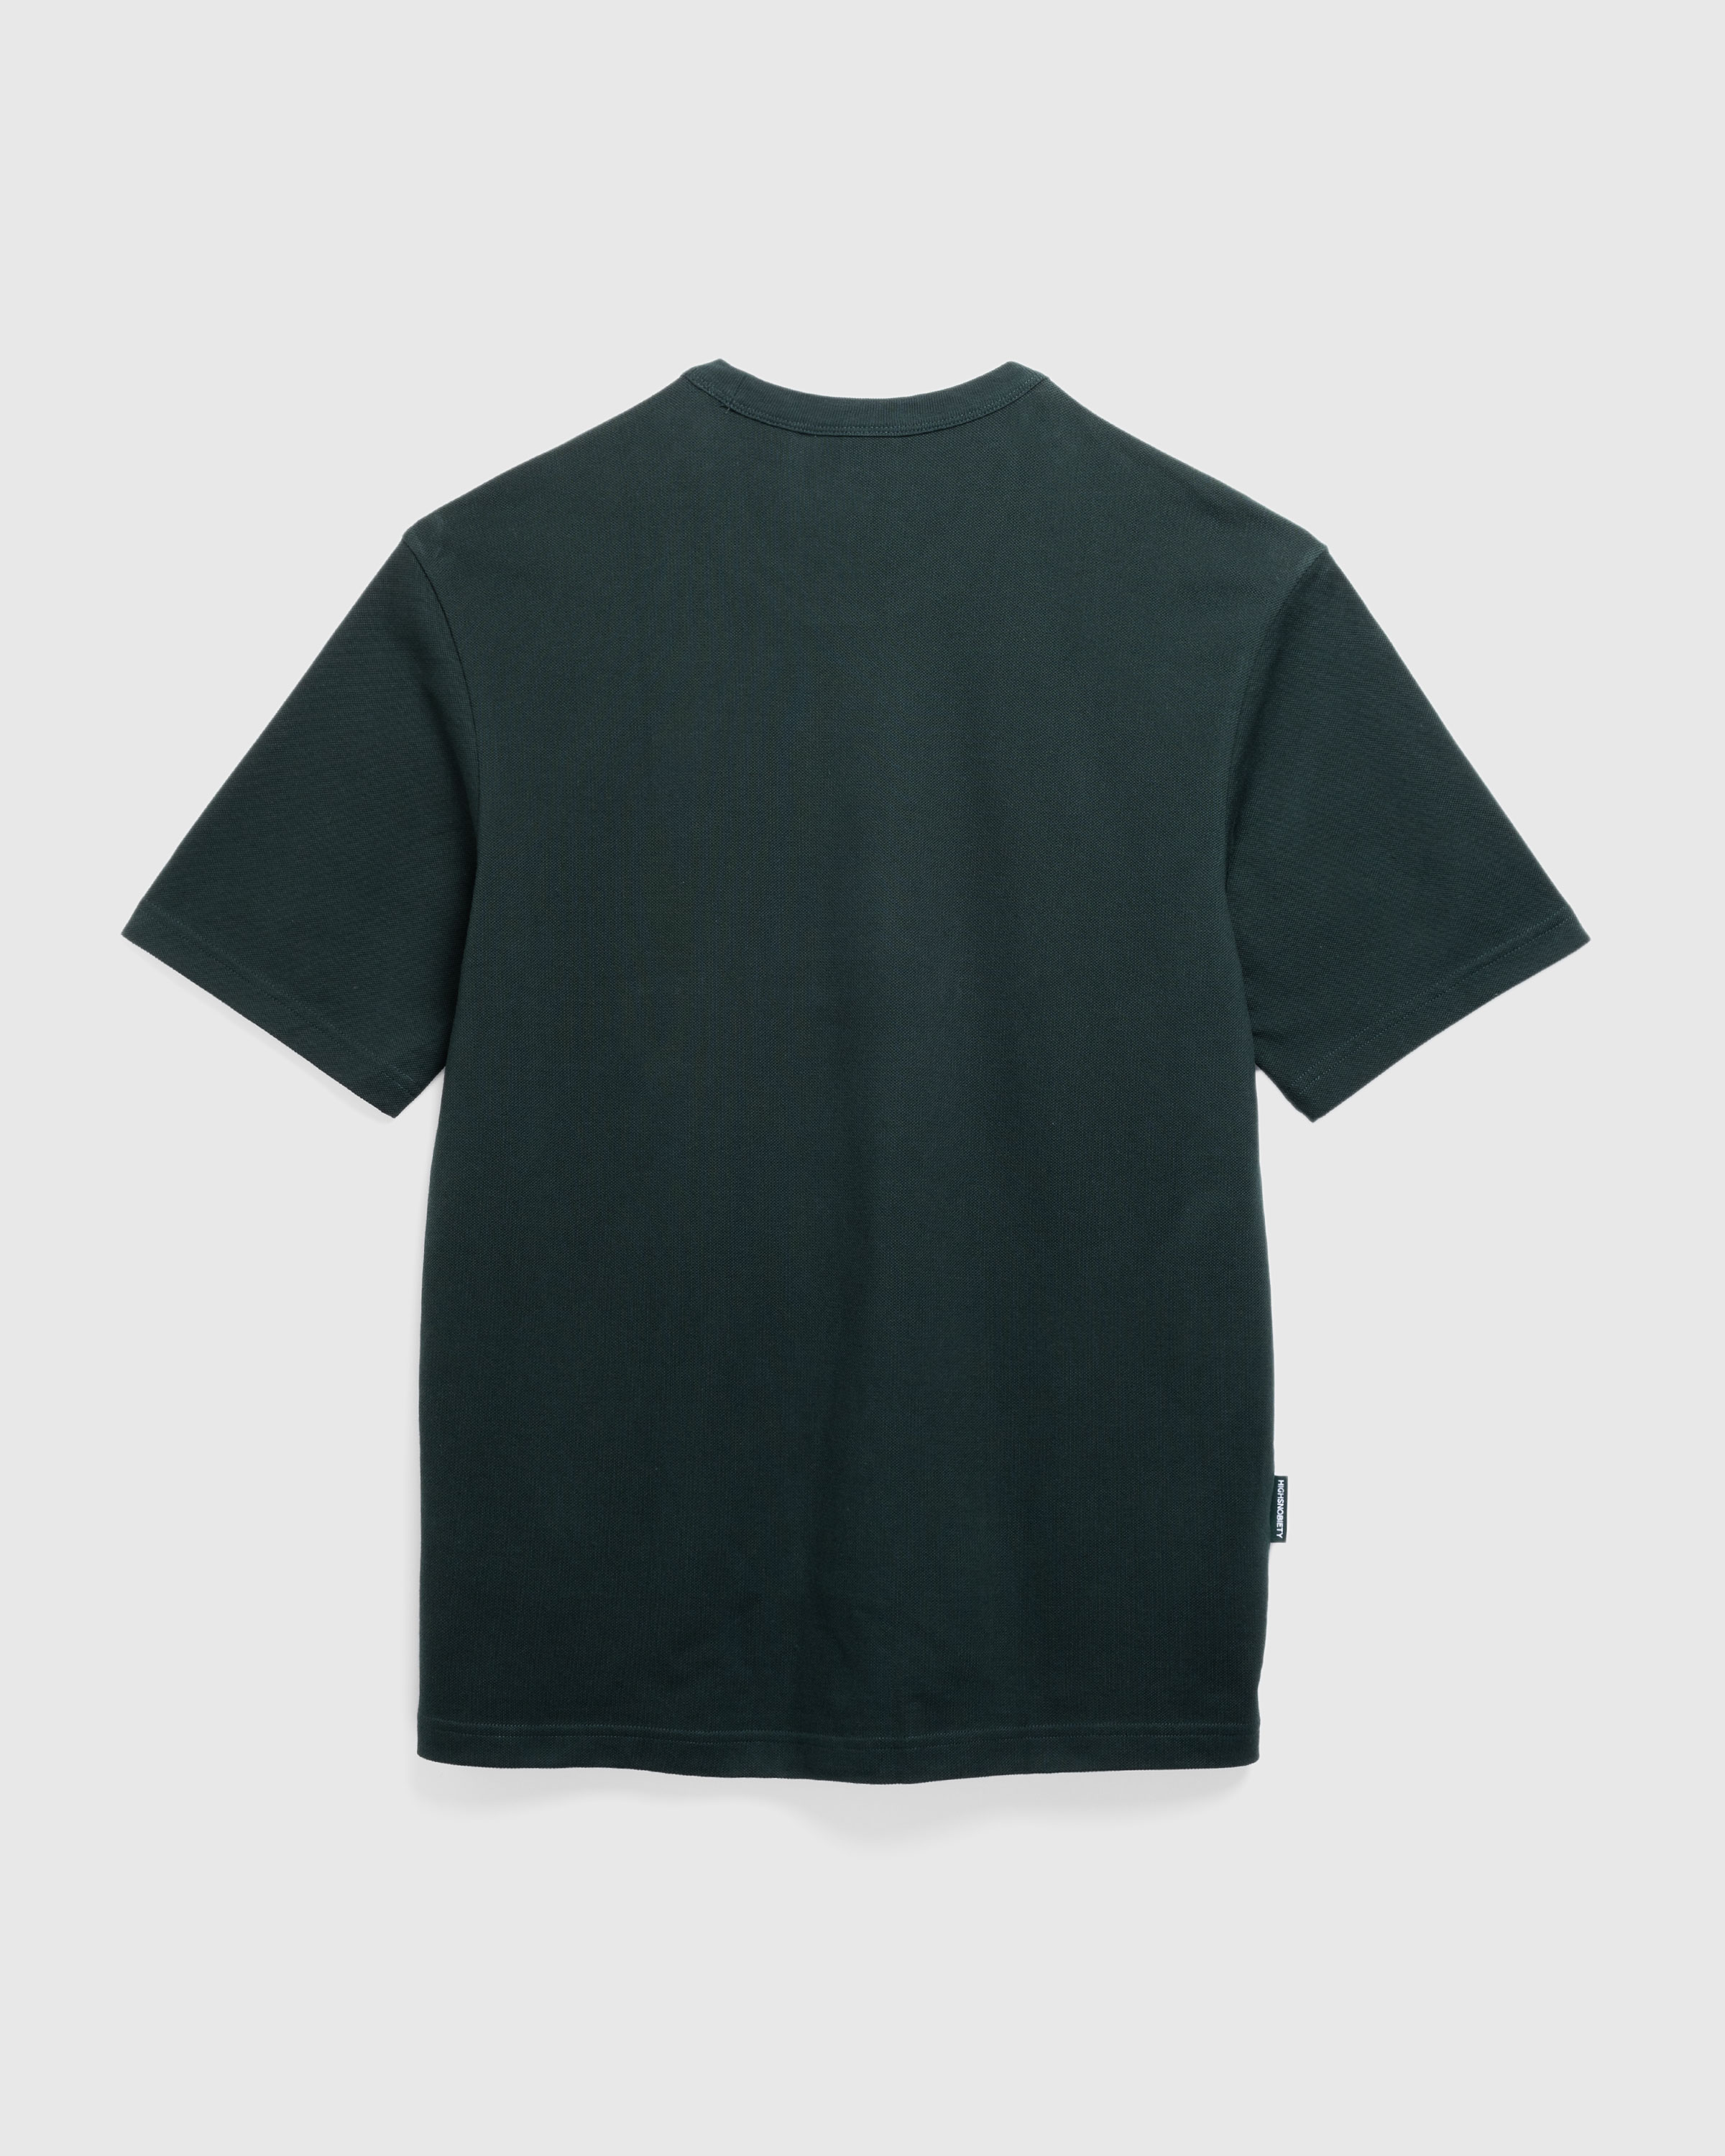 Lacoste x Highsnobiety – Piqué T-Shirt Green - T-Shirts - Green - Image 3